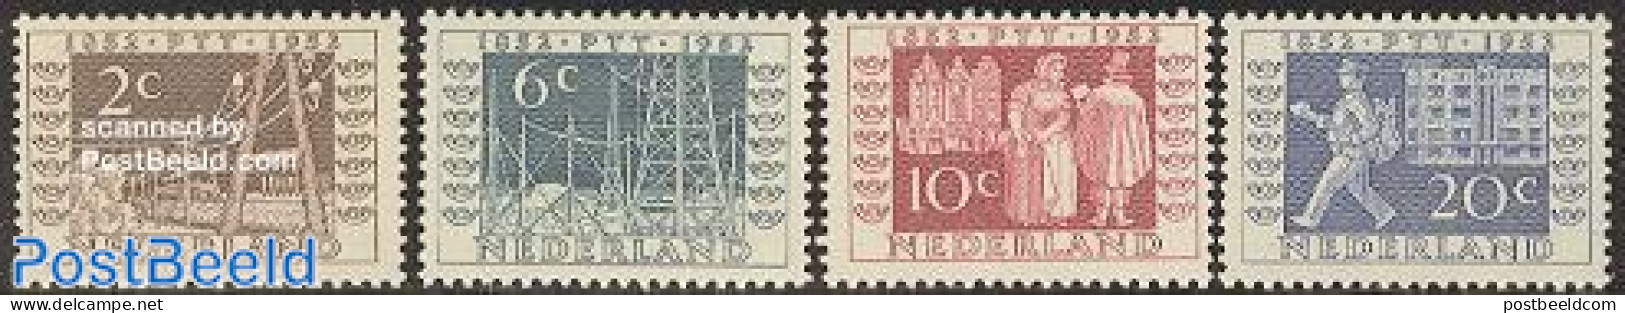 Netherlands 1952 Stamp Centenary, ITEP Exposition 4v, Mint NH, Science - Transport - Telecommunication - Post - Railways - Neufs